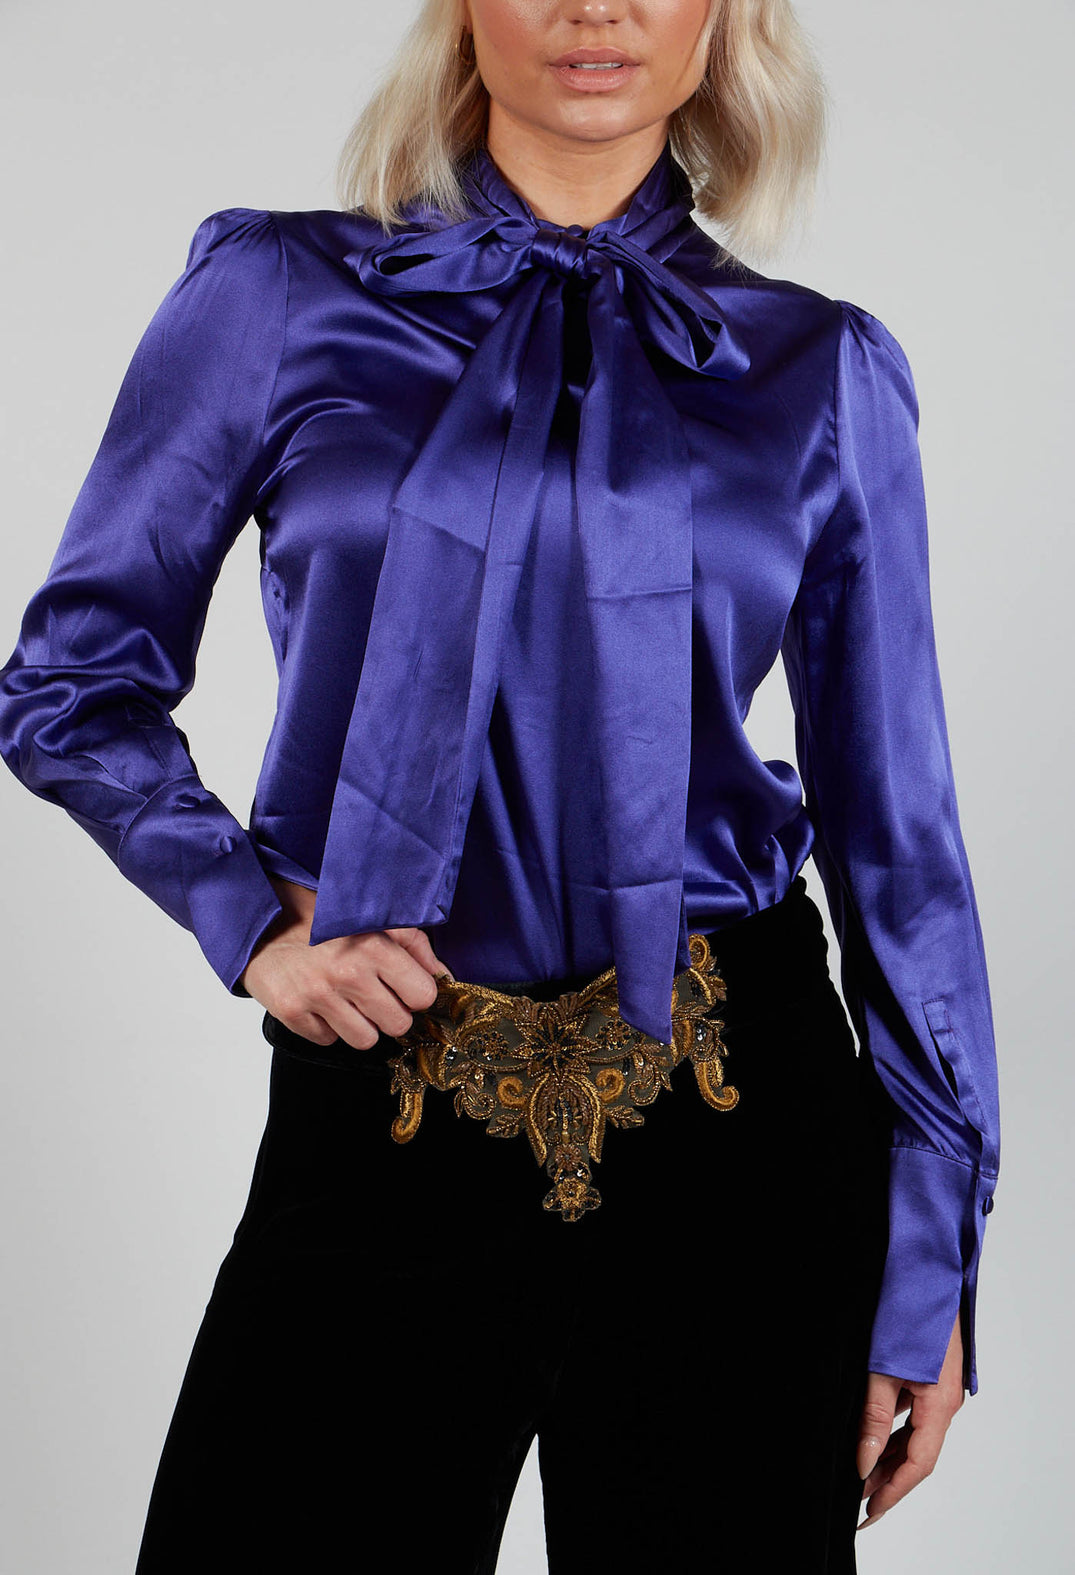 Elsa Blouse in Royal Purple